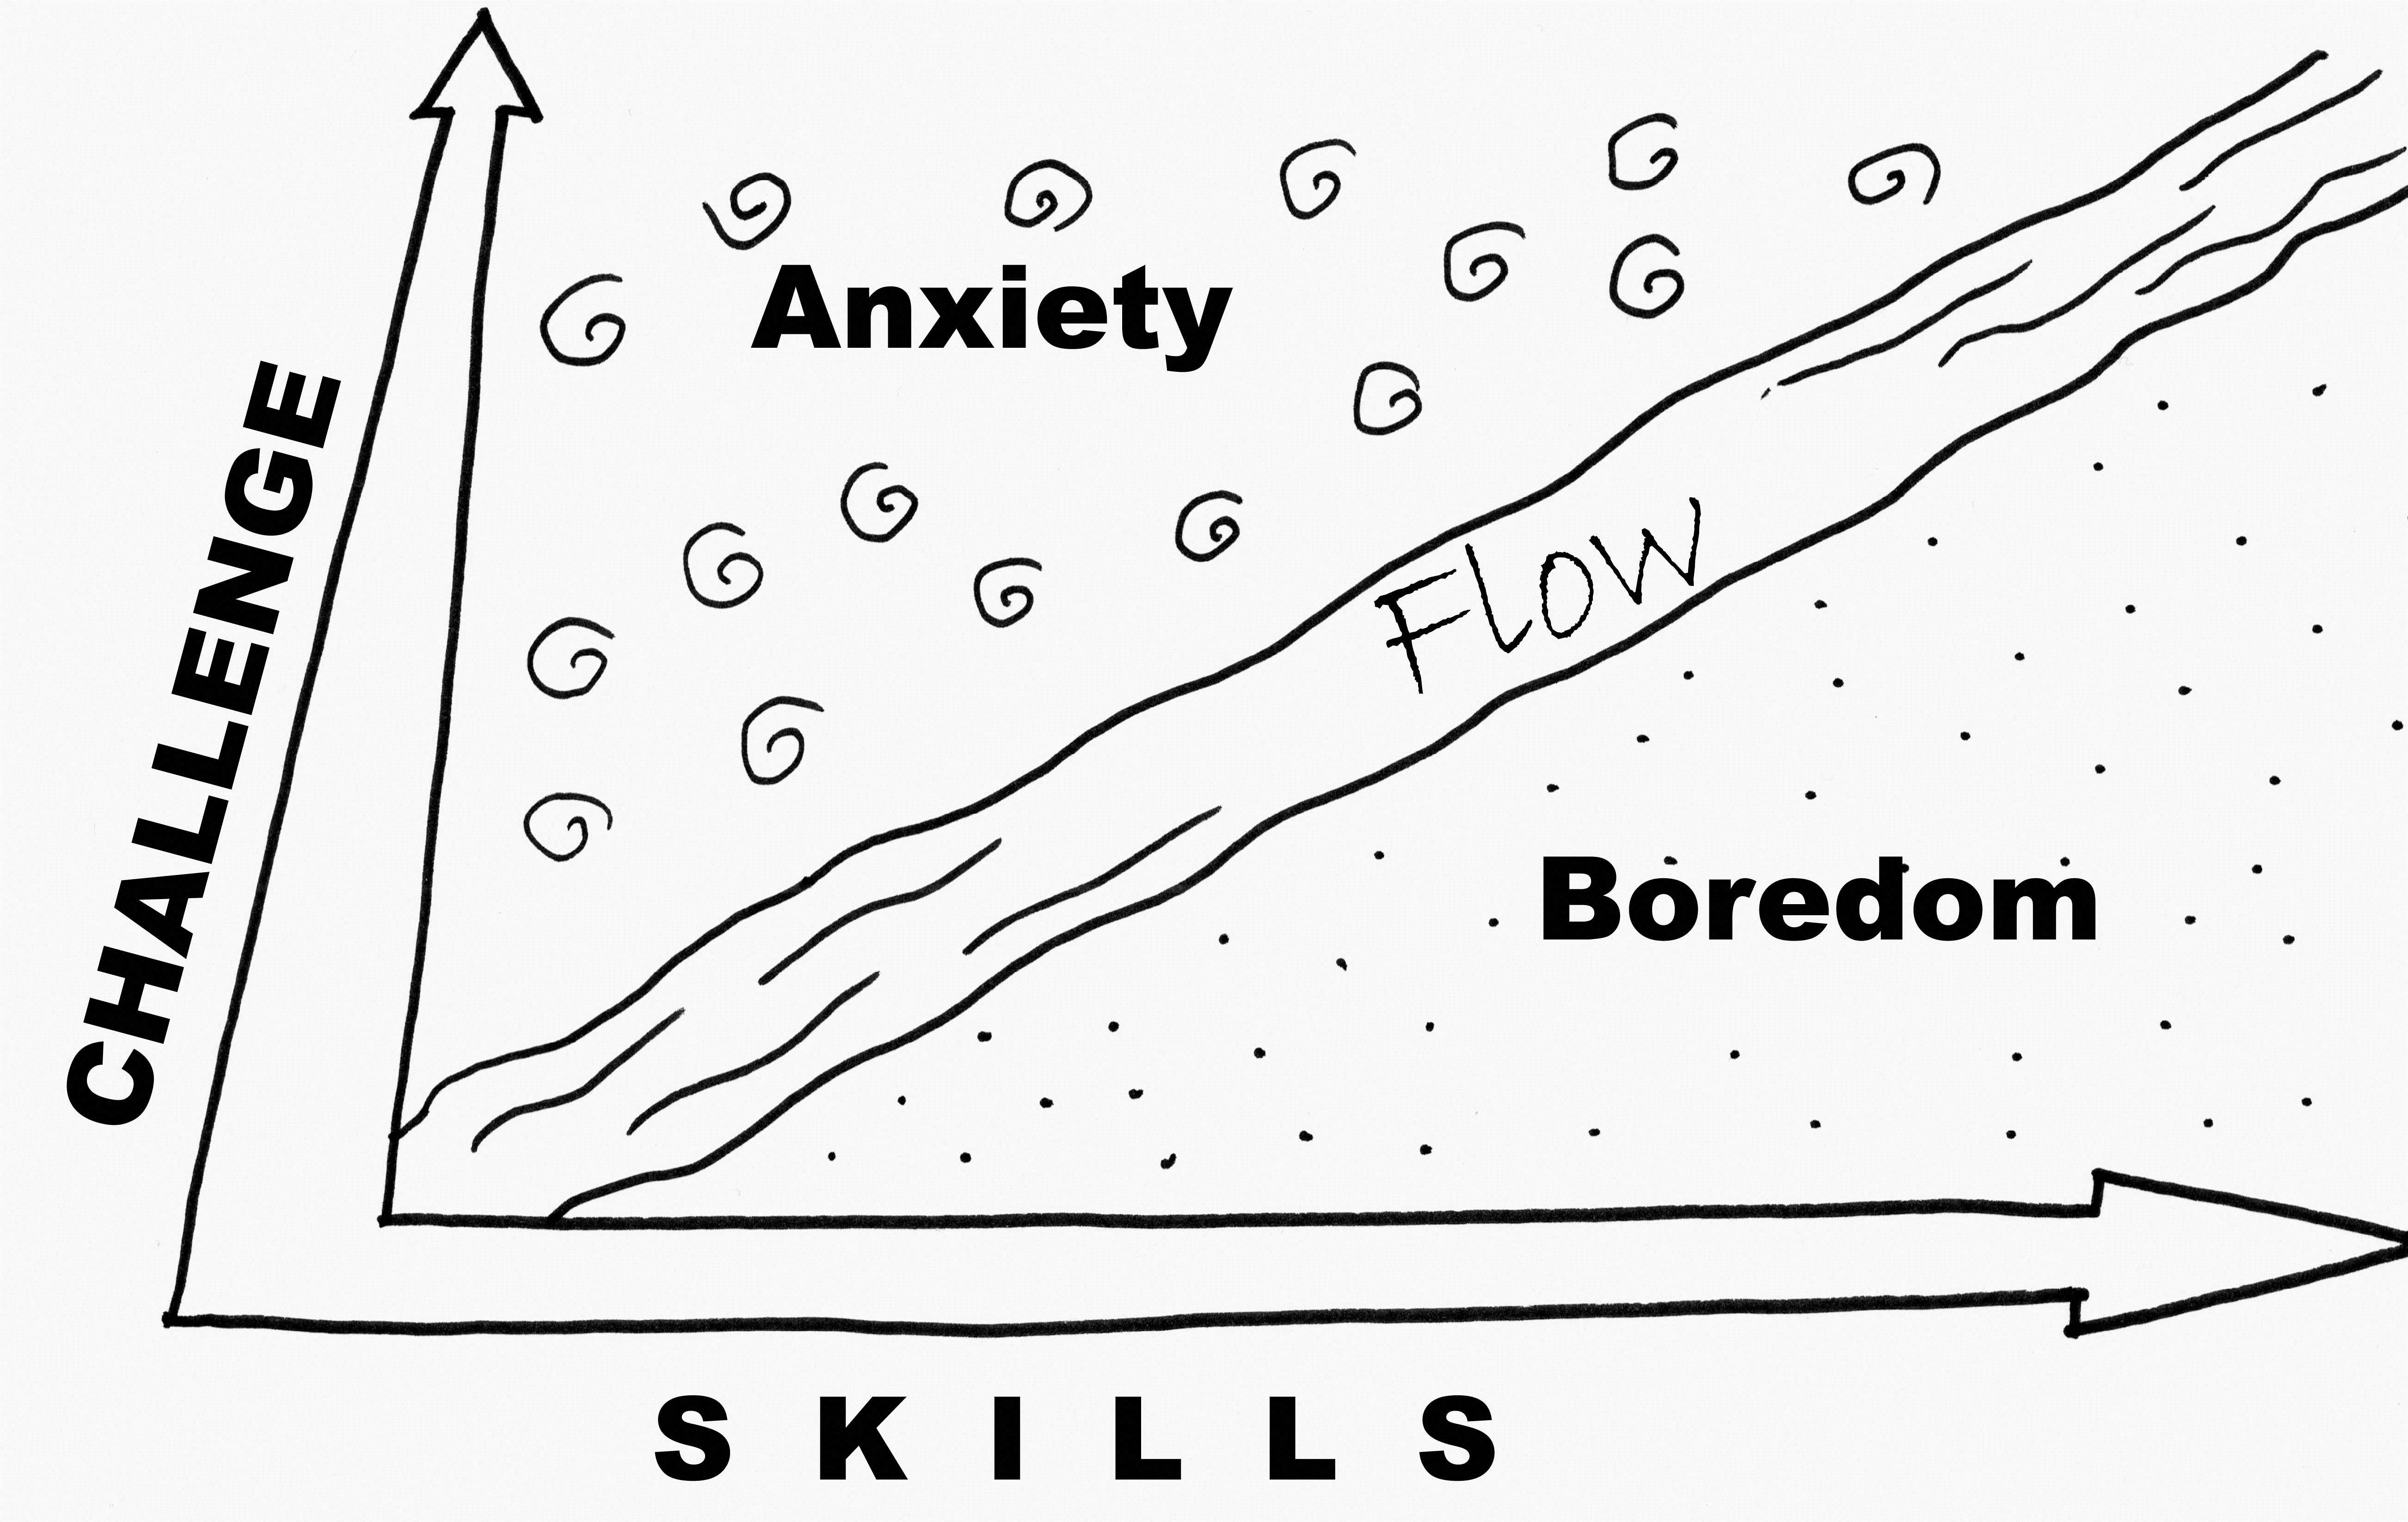 Csikszentmihalyi's diagram of flow